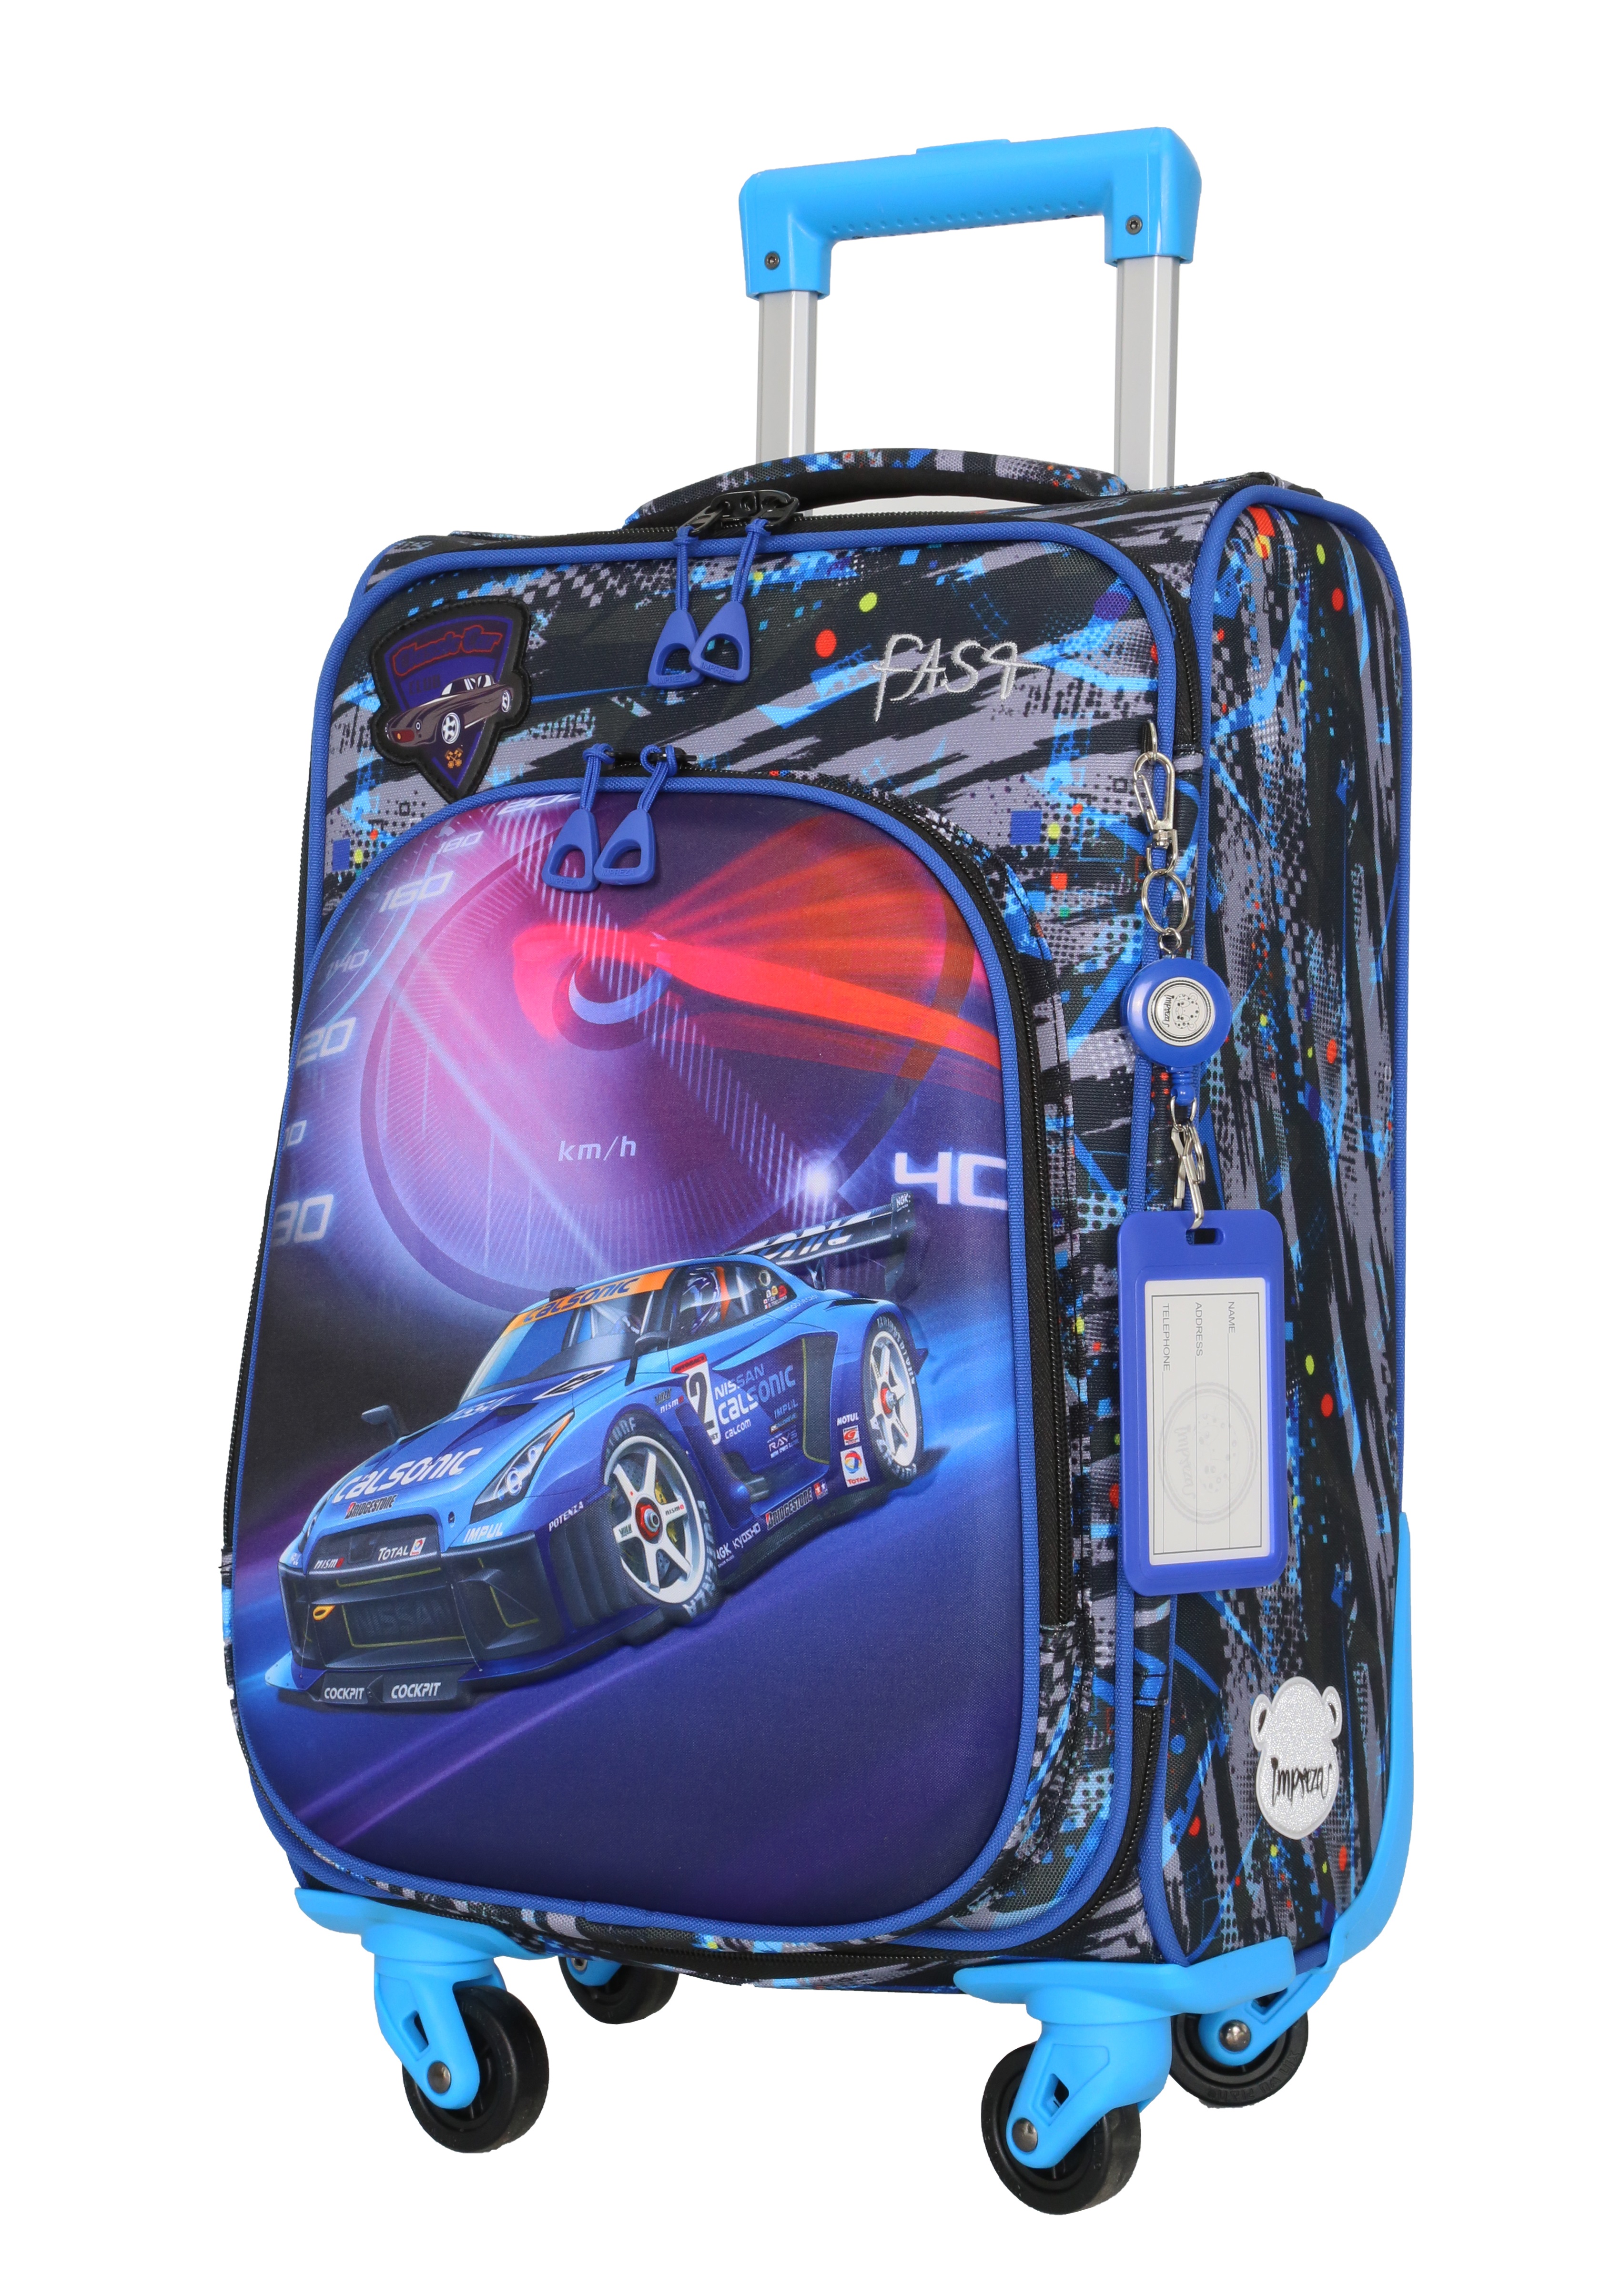 Чемодан детский BAGS-ART DS 50 серия 50 синий,красный чемодан ninetygo lightweight luggage 20 красный